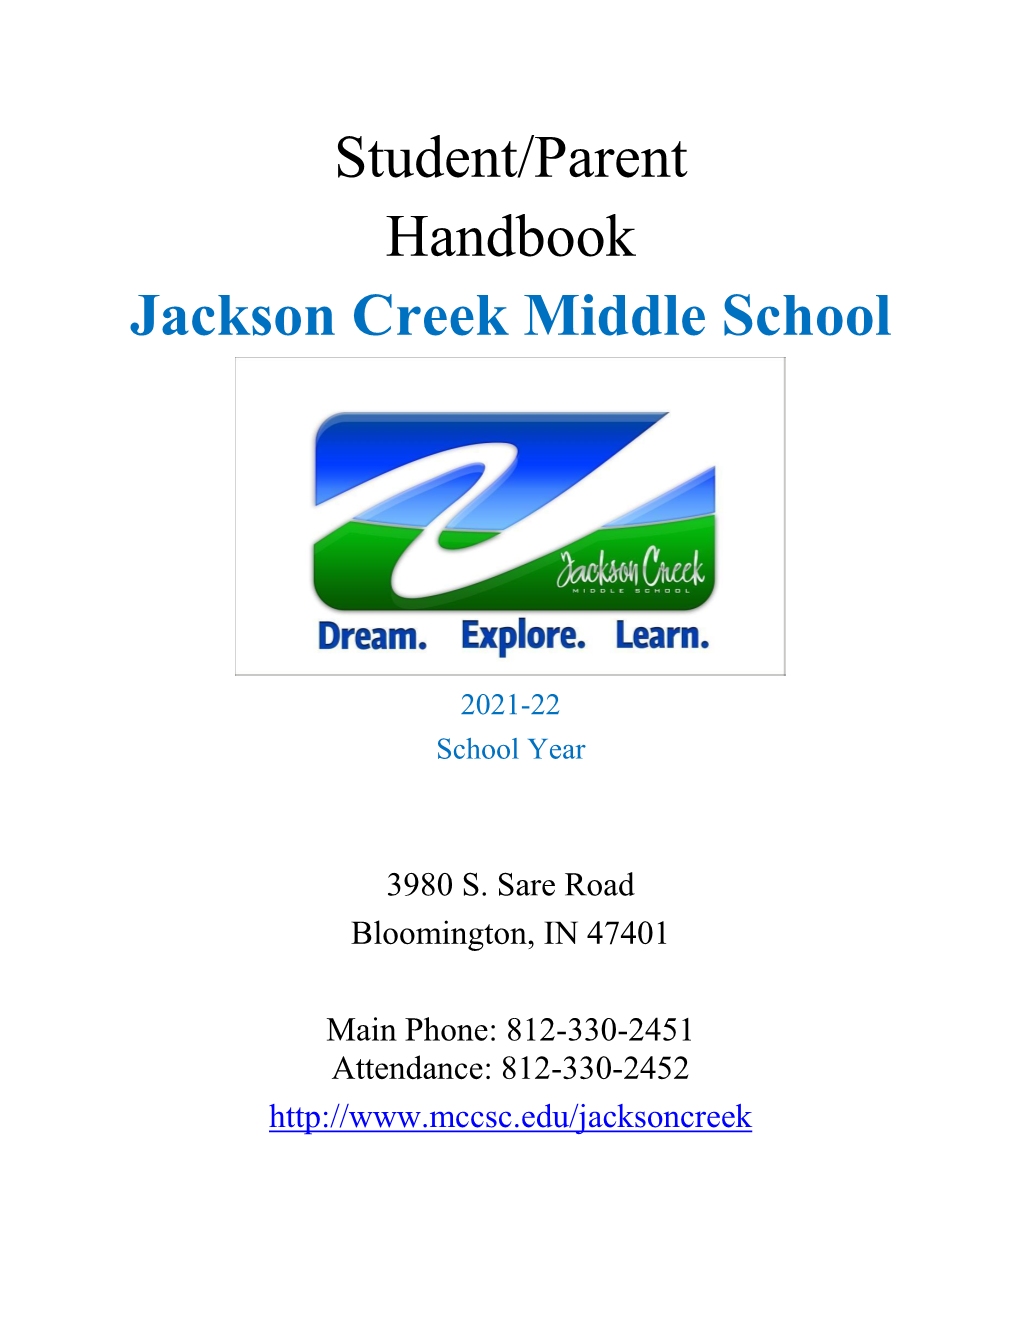 Jackson Creek Middle School